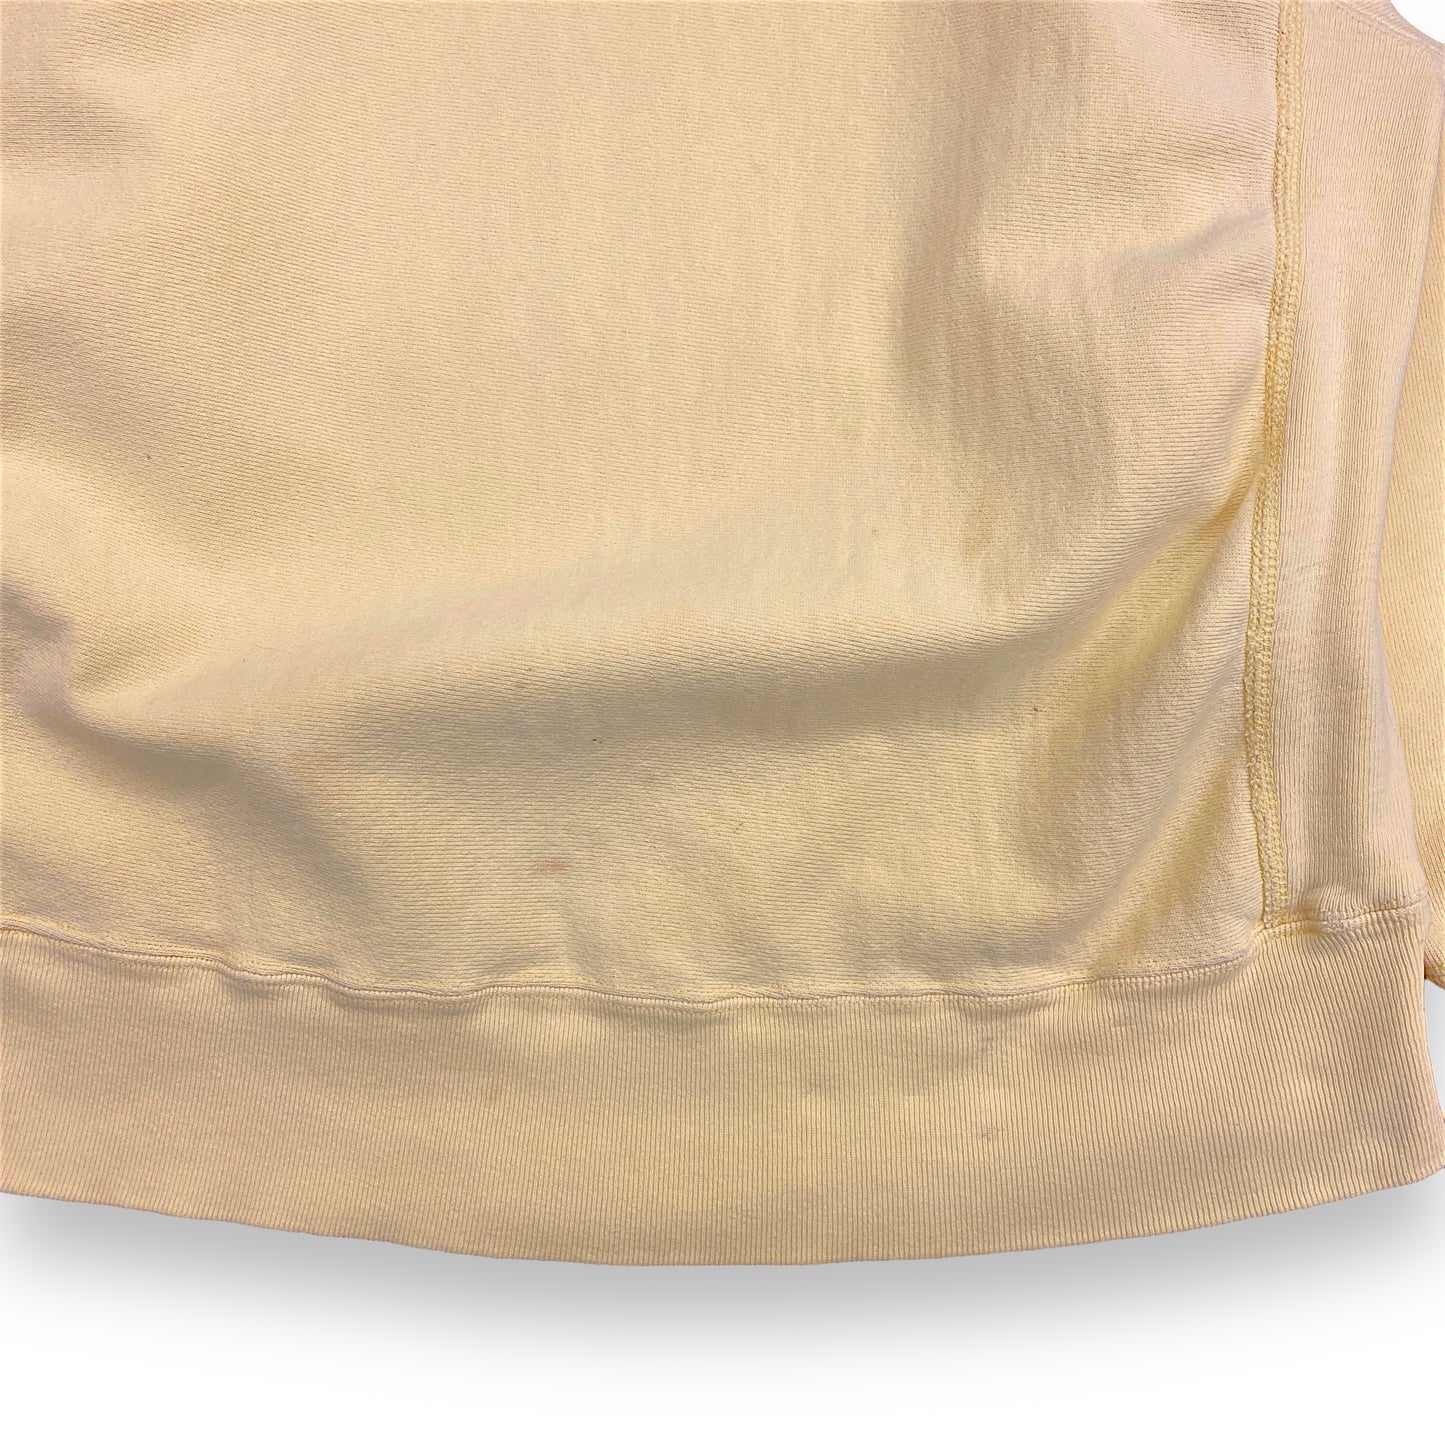 1980s Champion Reverse Weave "Straw Yellow" Sweatshirt - Size Large